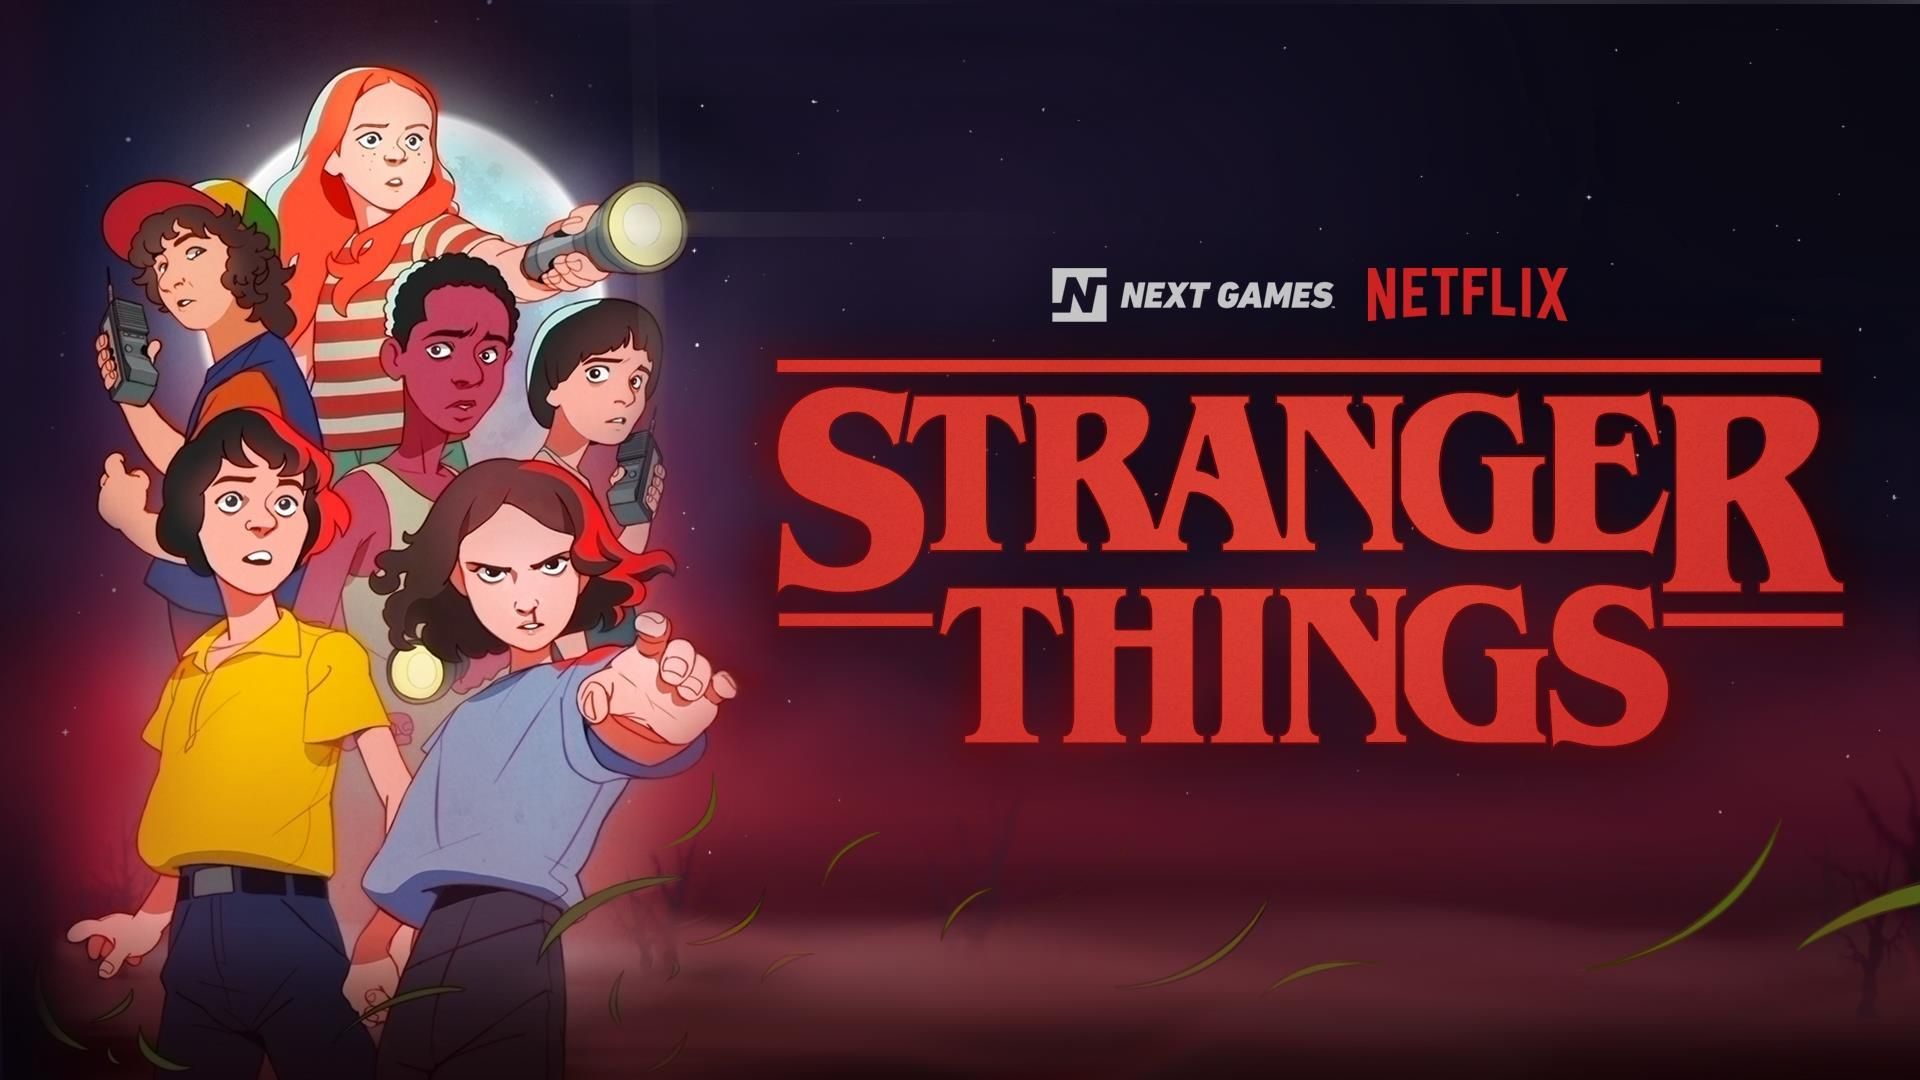 Netflix hit Stranger Things spun into AR mobile game